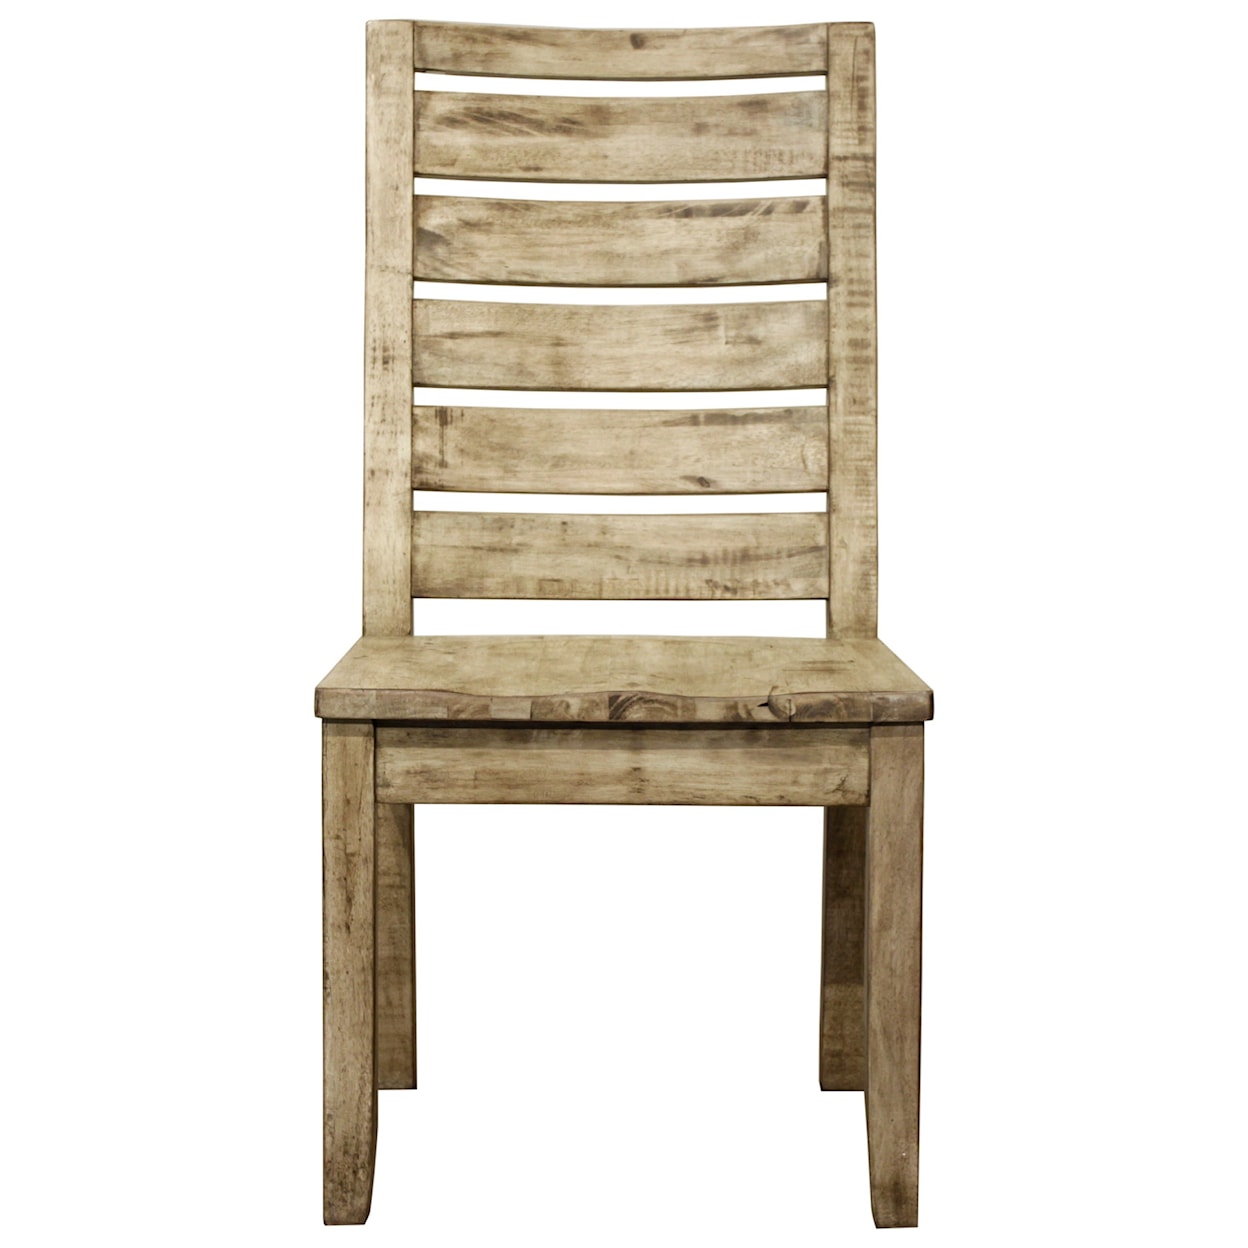 Harris Furniture Renewal by Napa Ladderback Dining Chair